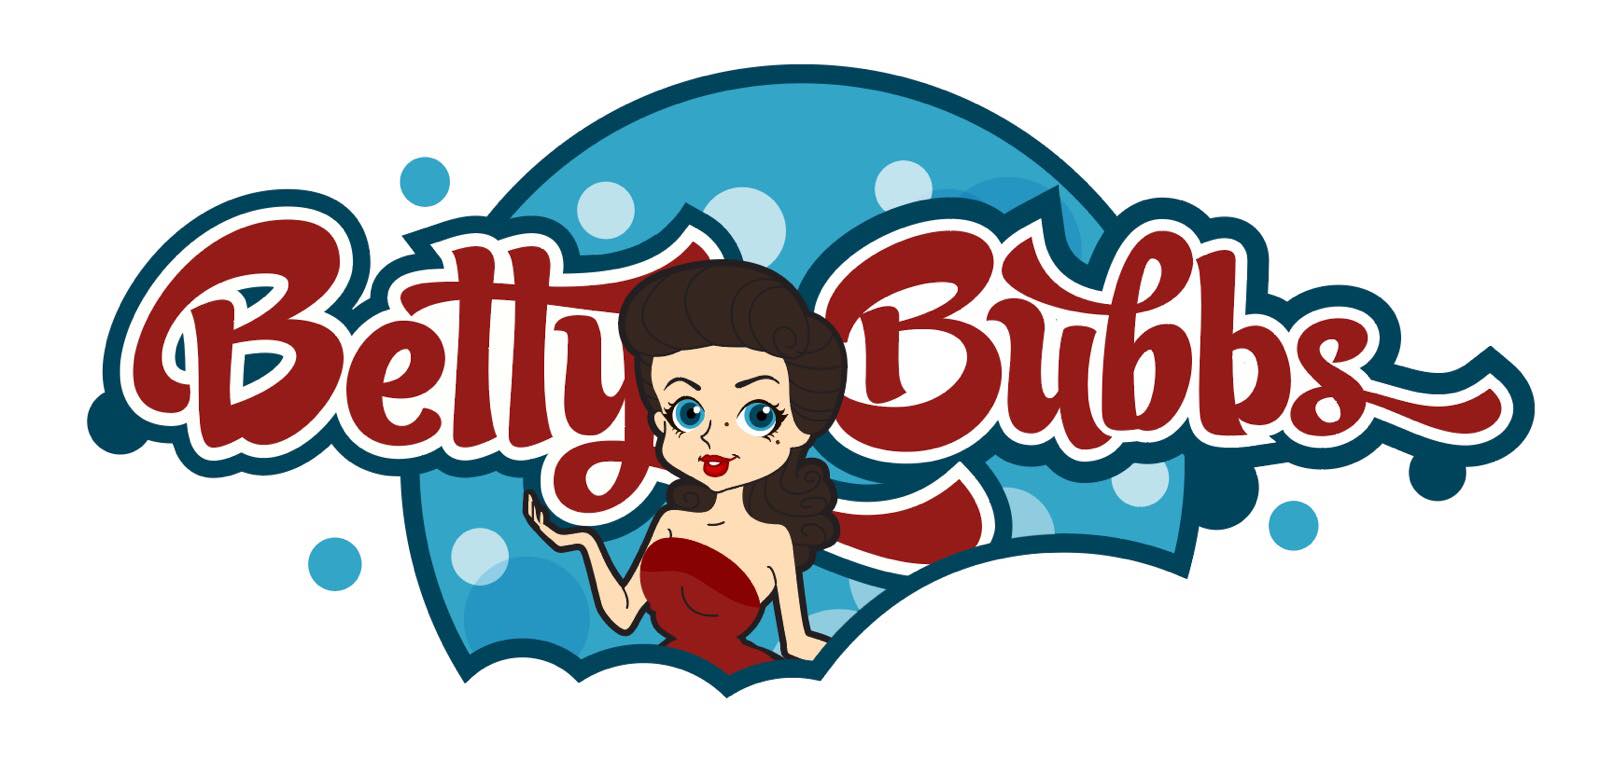 Betty Bubbs